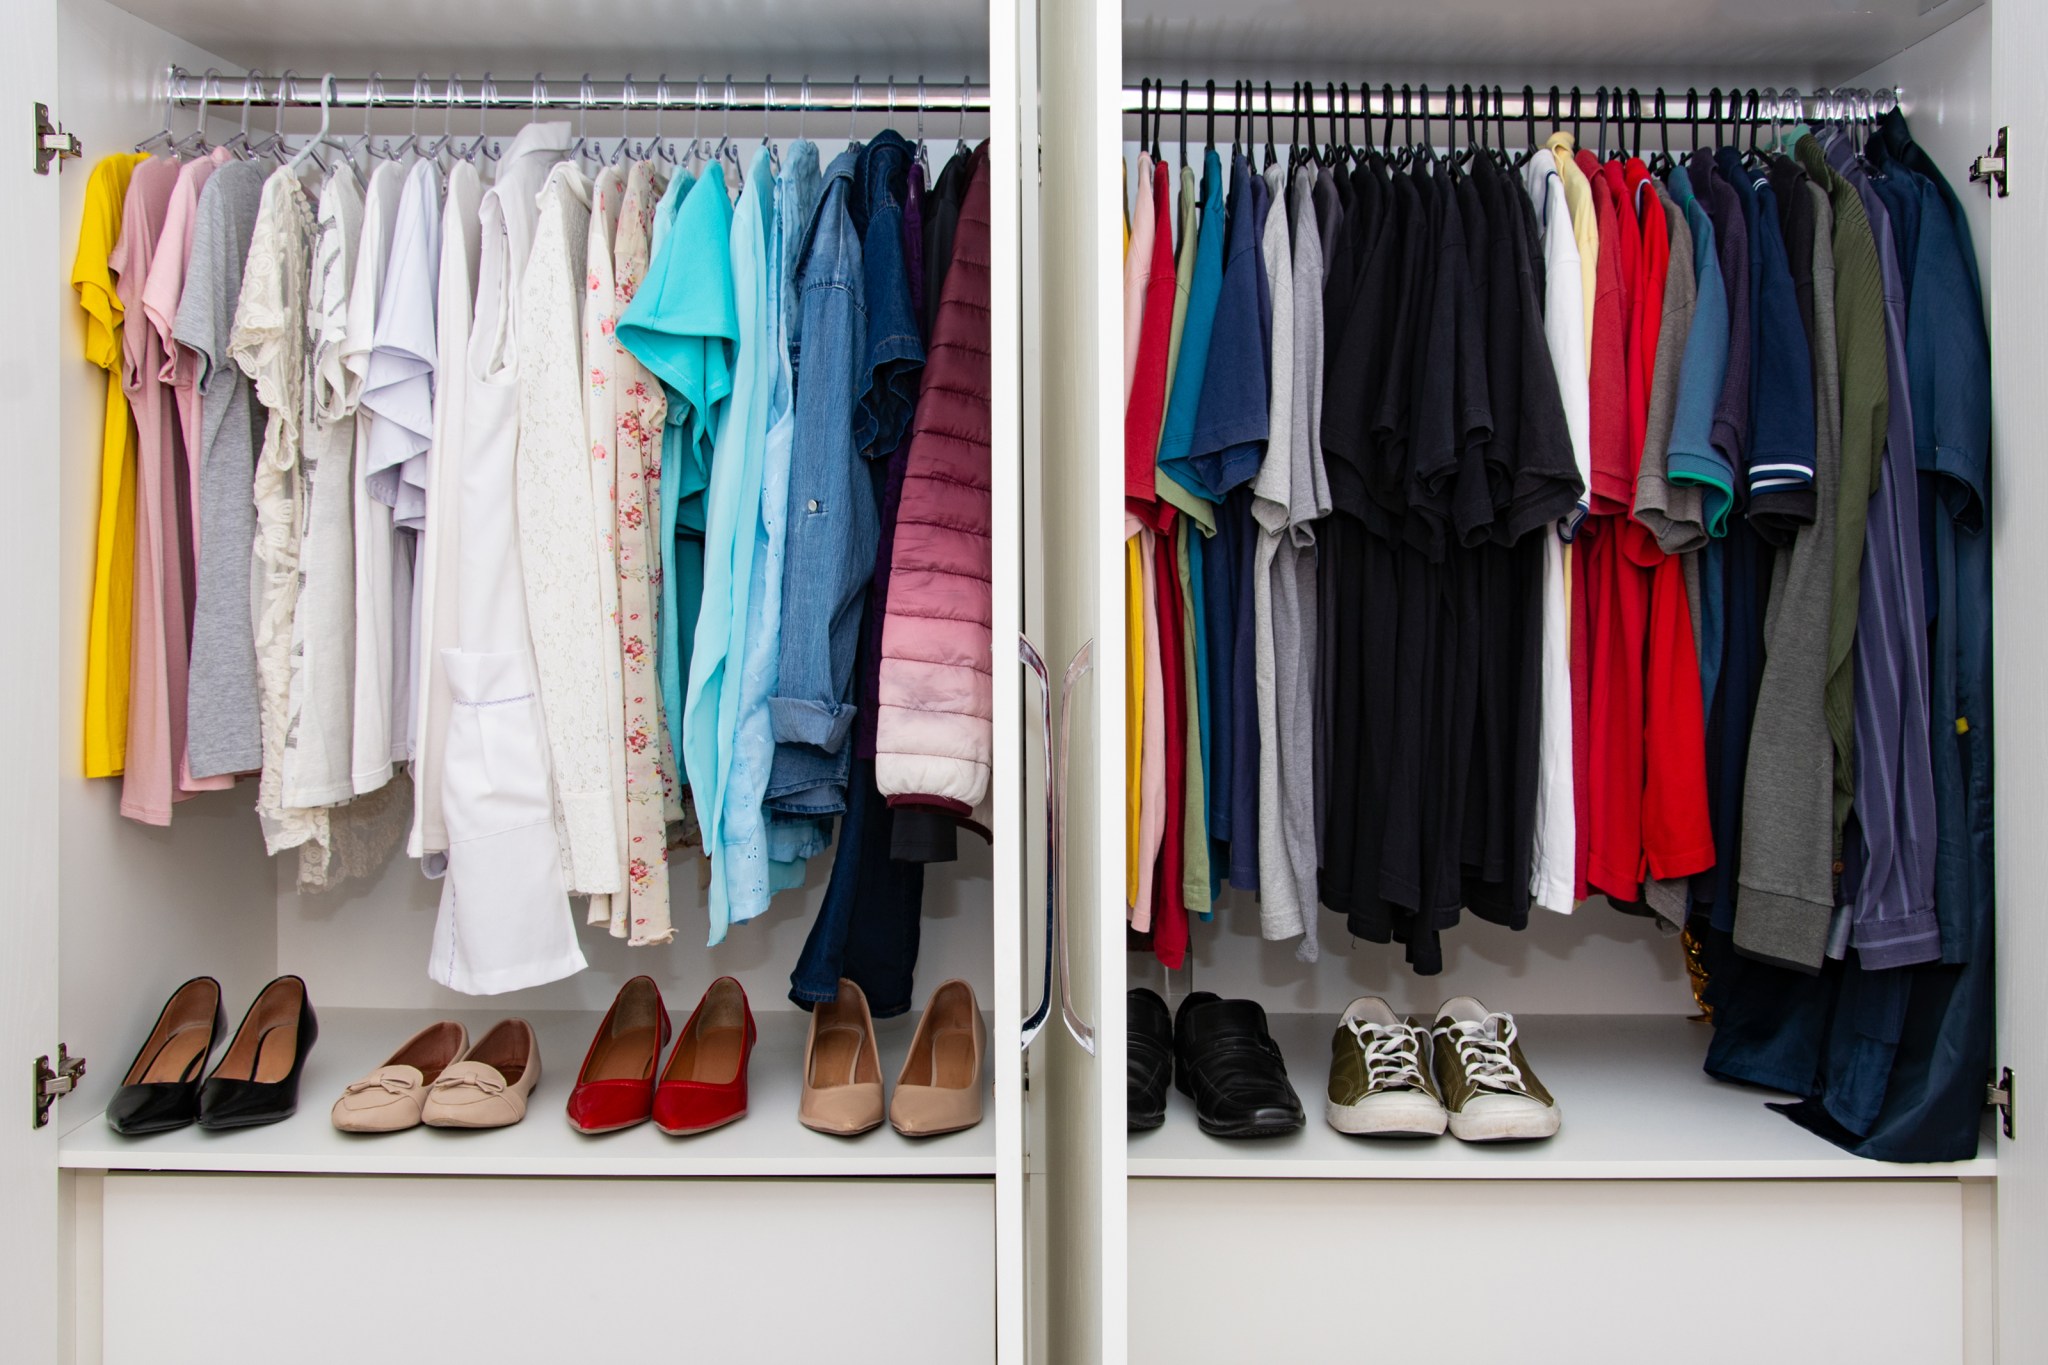 https://www.houselogic.com/wp-content/uploads/2022/06/closet-organizer-ideas-men-women-colorful-wardrobe.jpg?crop&resize=2048%2C1365